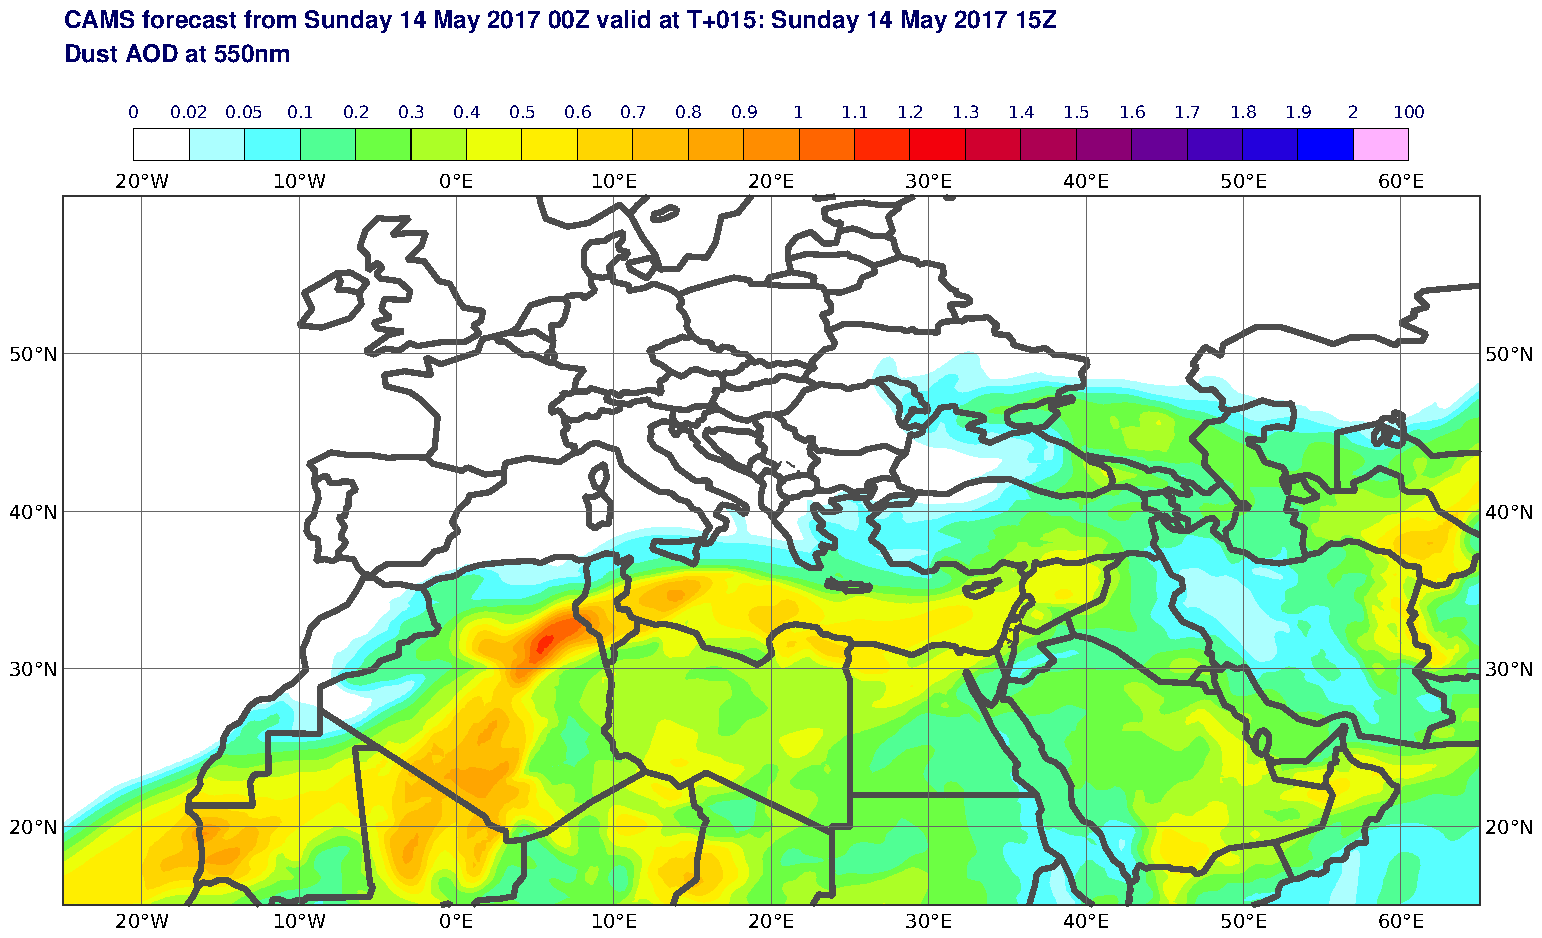 Dust AOD at 550nm valid at T15 - 2017-05-14 15:00